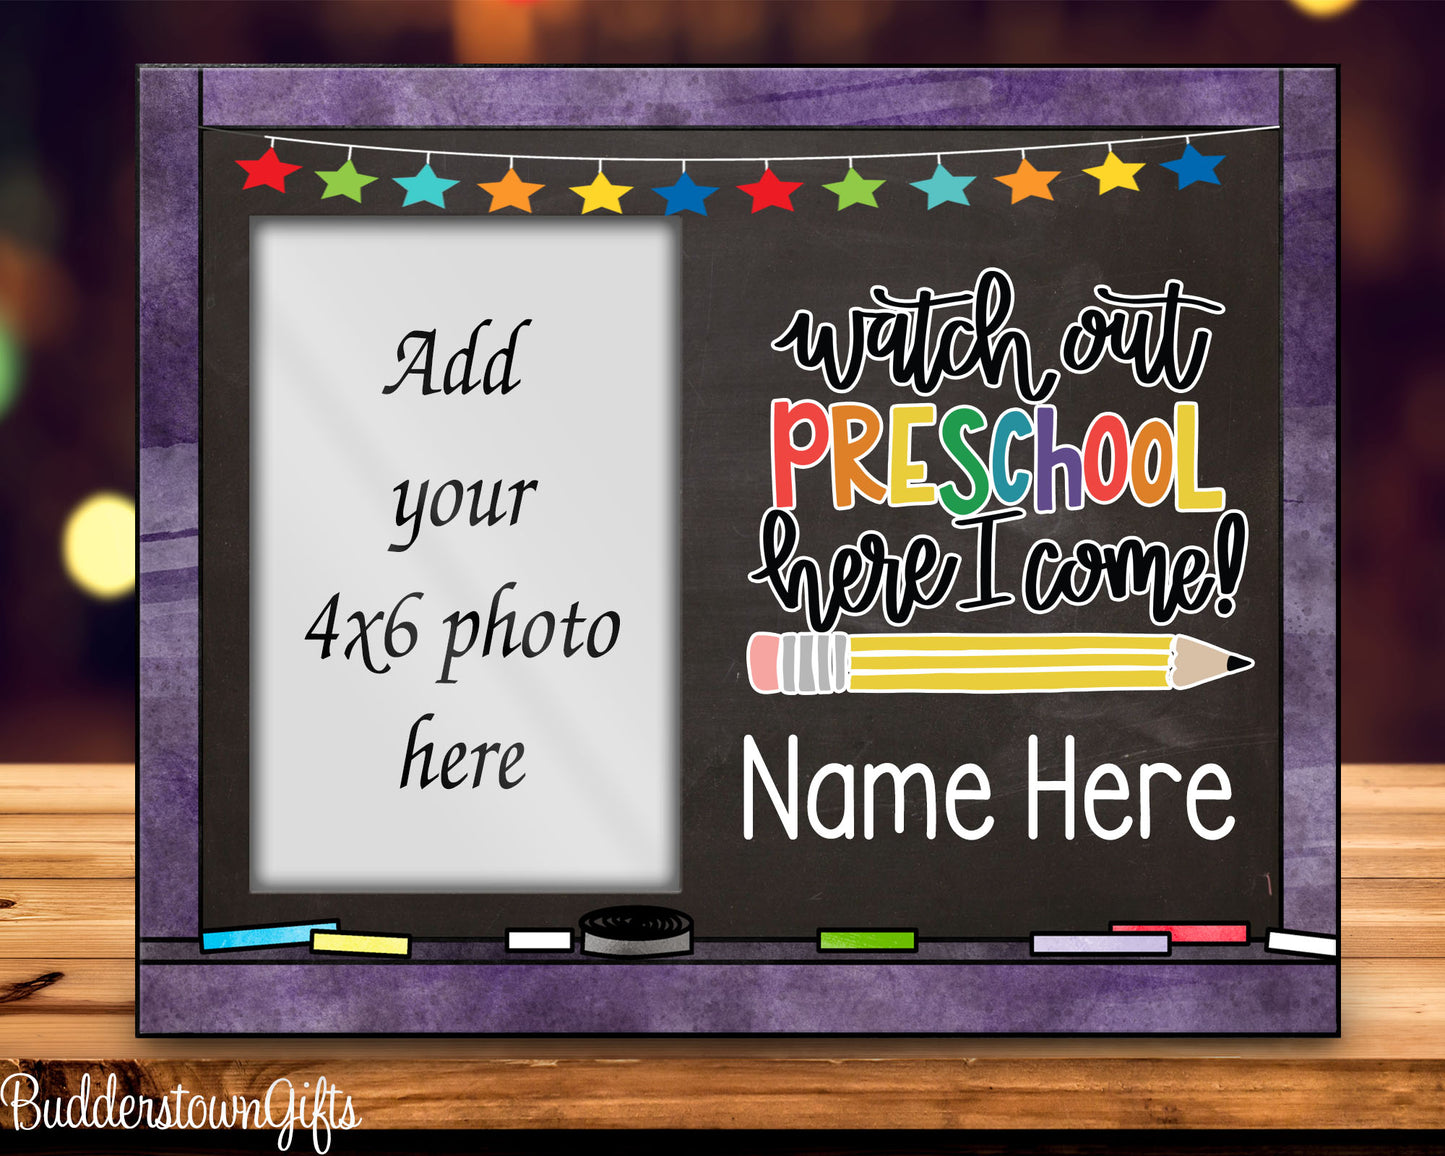 Watch Out Preschool Here I Come - Personalized Frame - graduation - Preschool